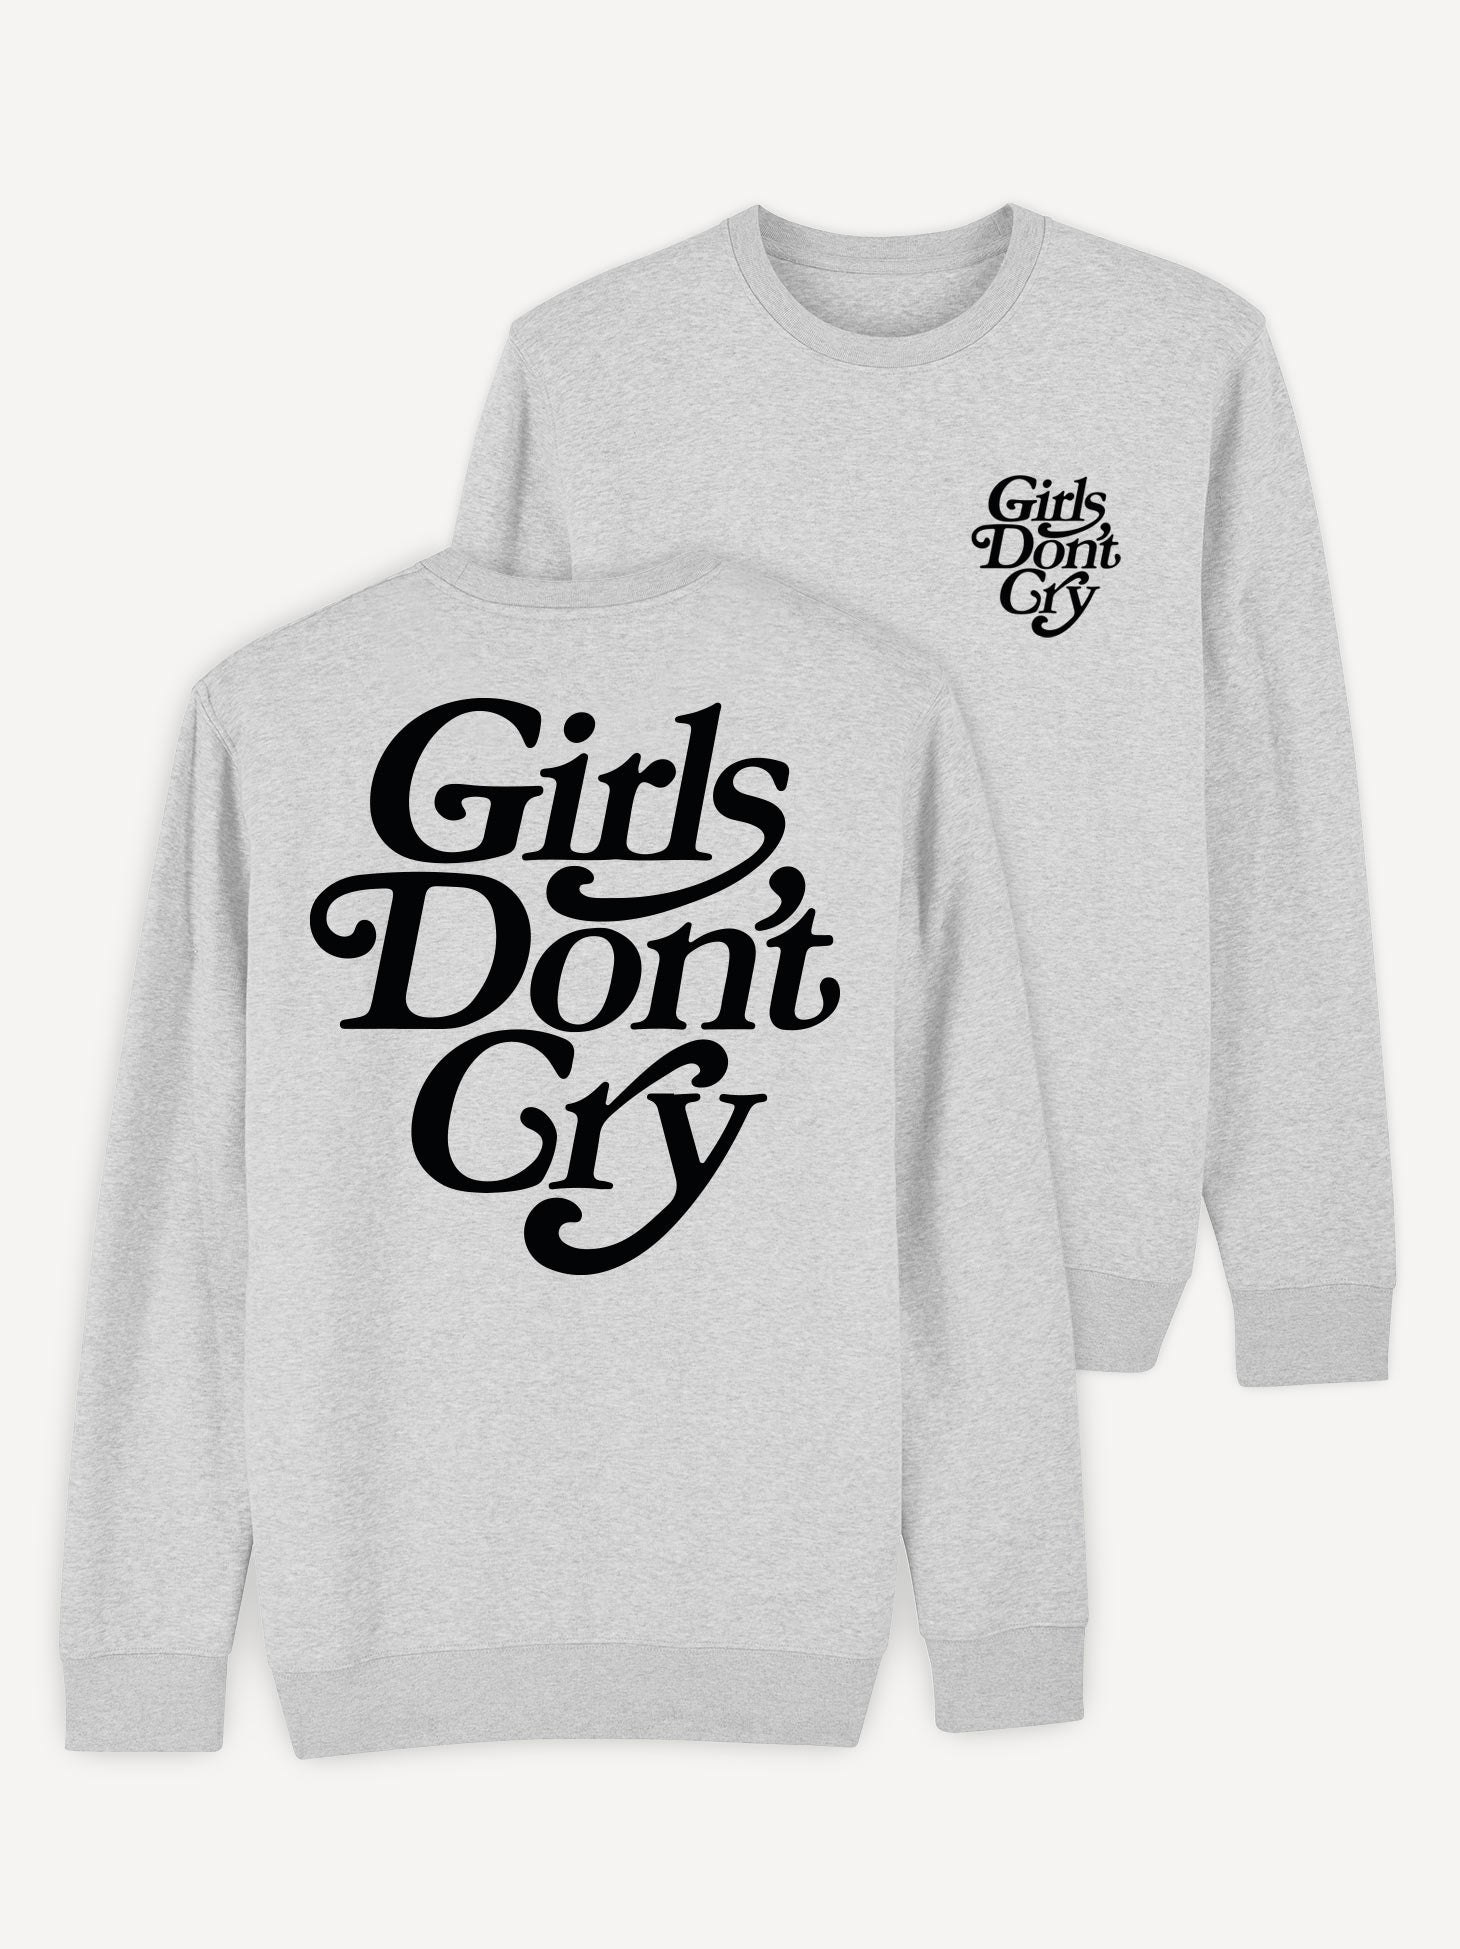 Girls don’t cry grey sweatshirt